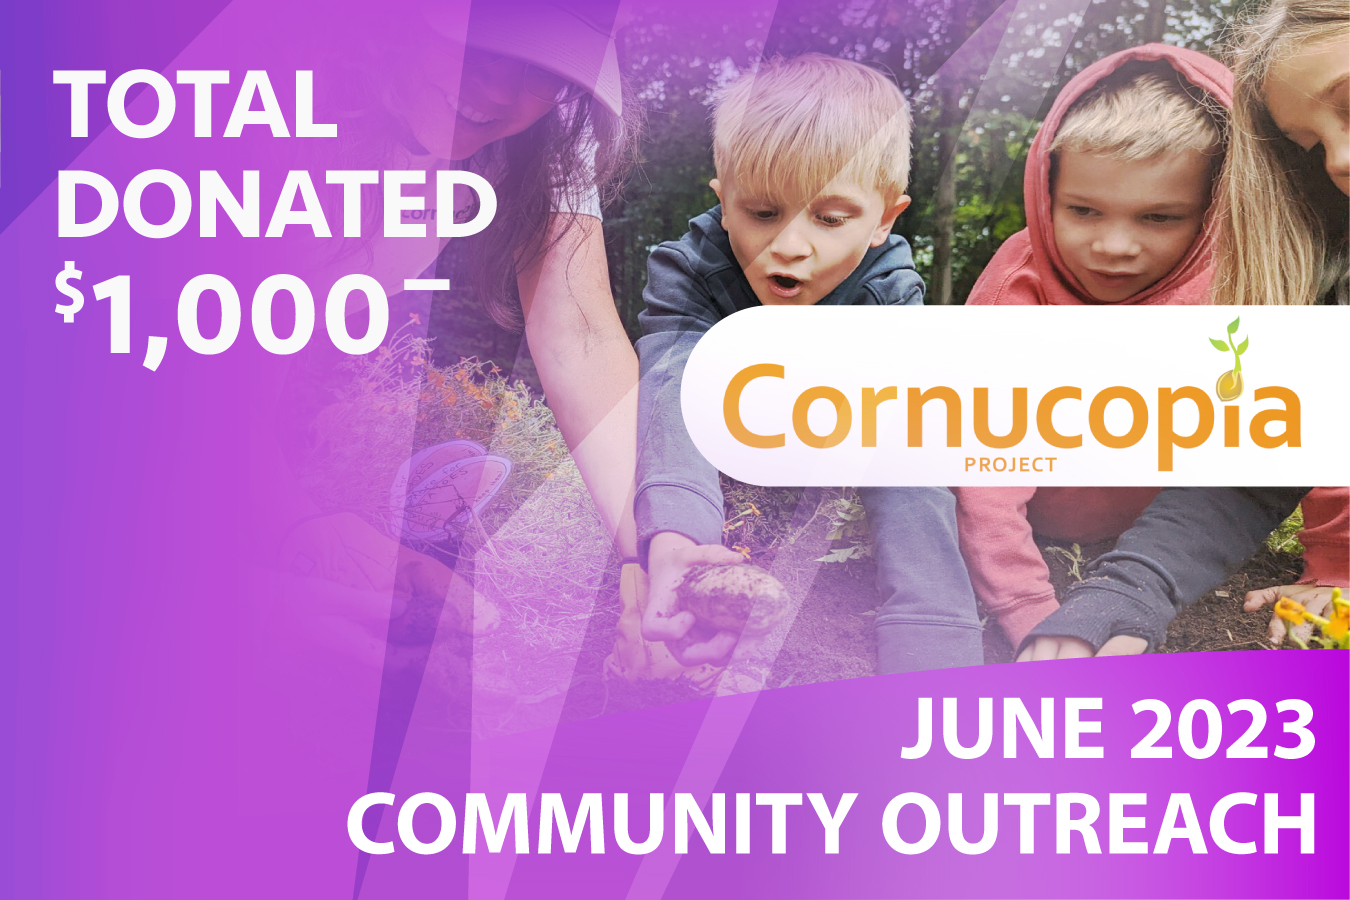 Graphic promoting our June 2023 Community Outreach benefactor - Cornucopia Project.